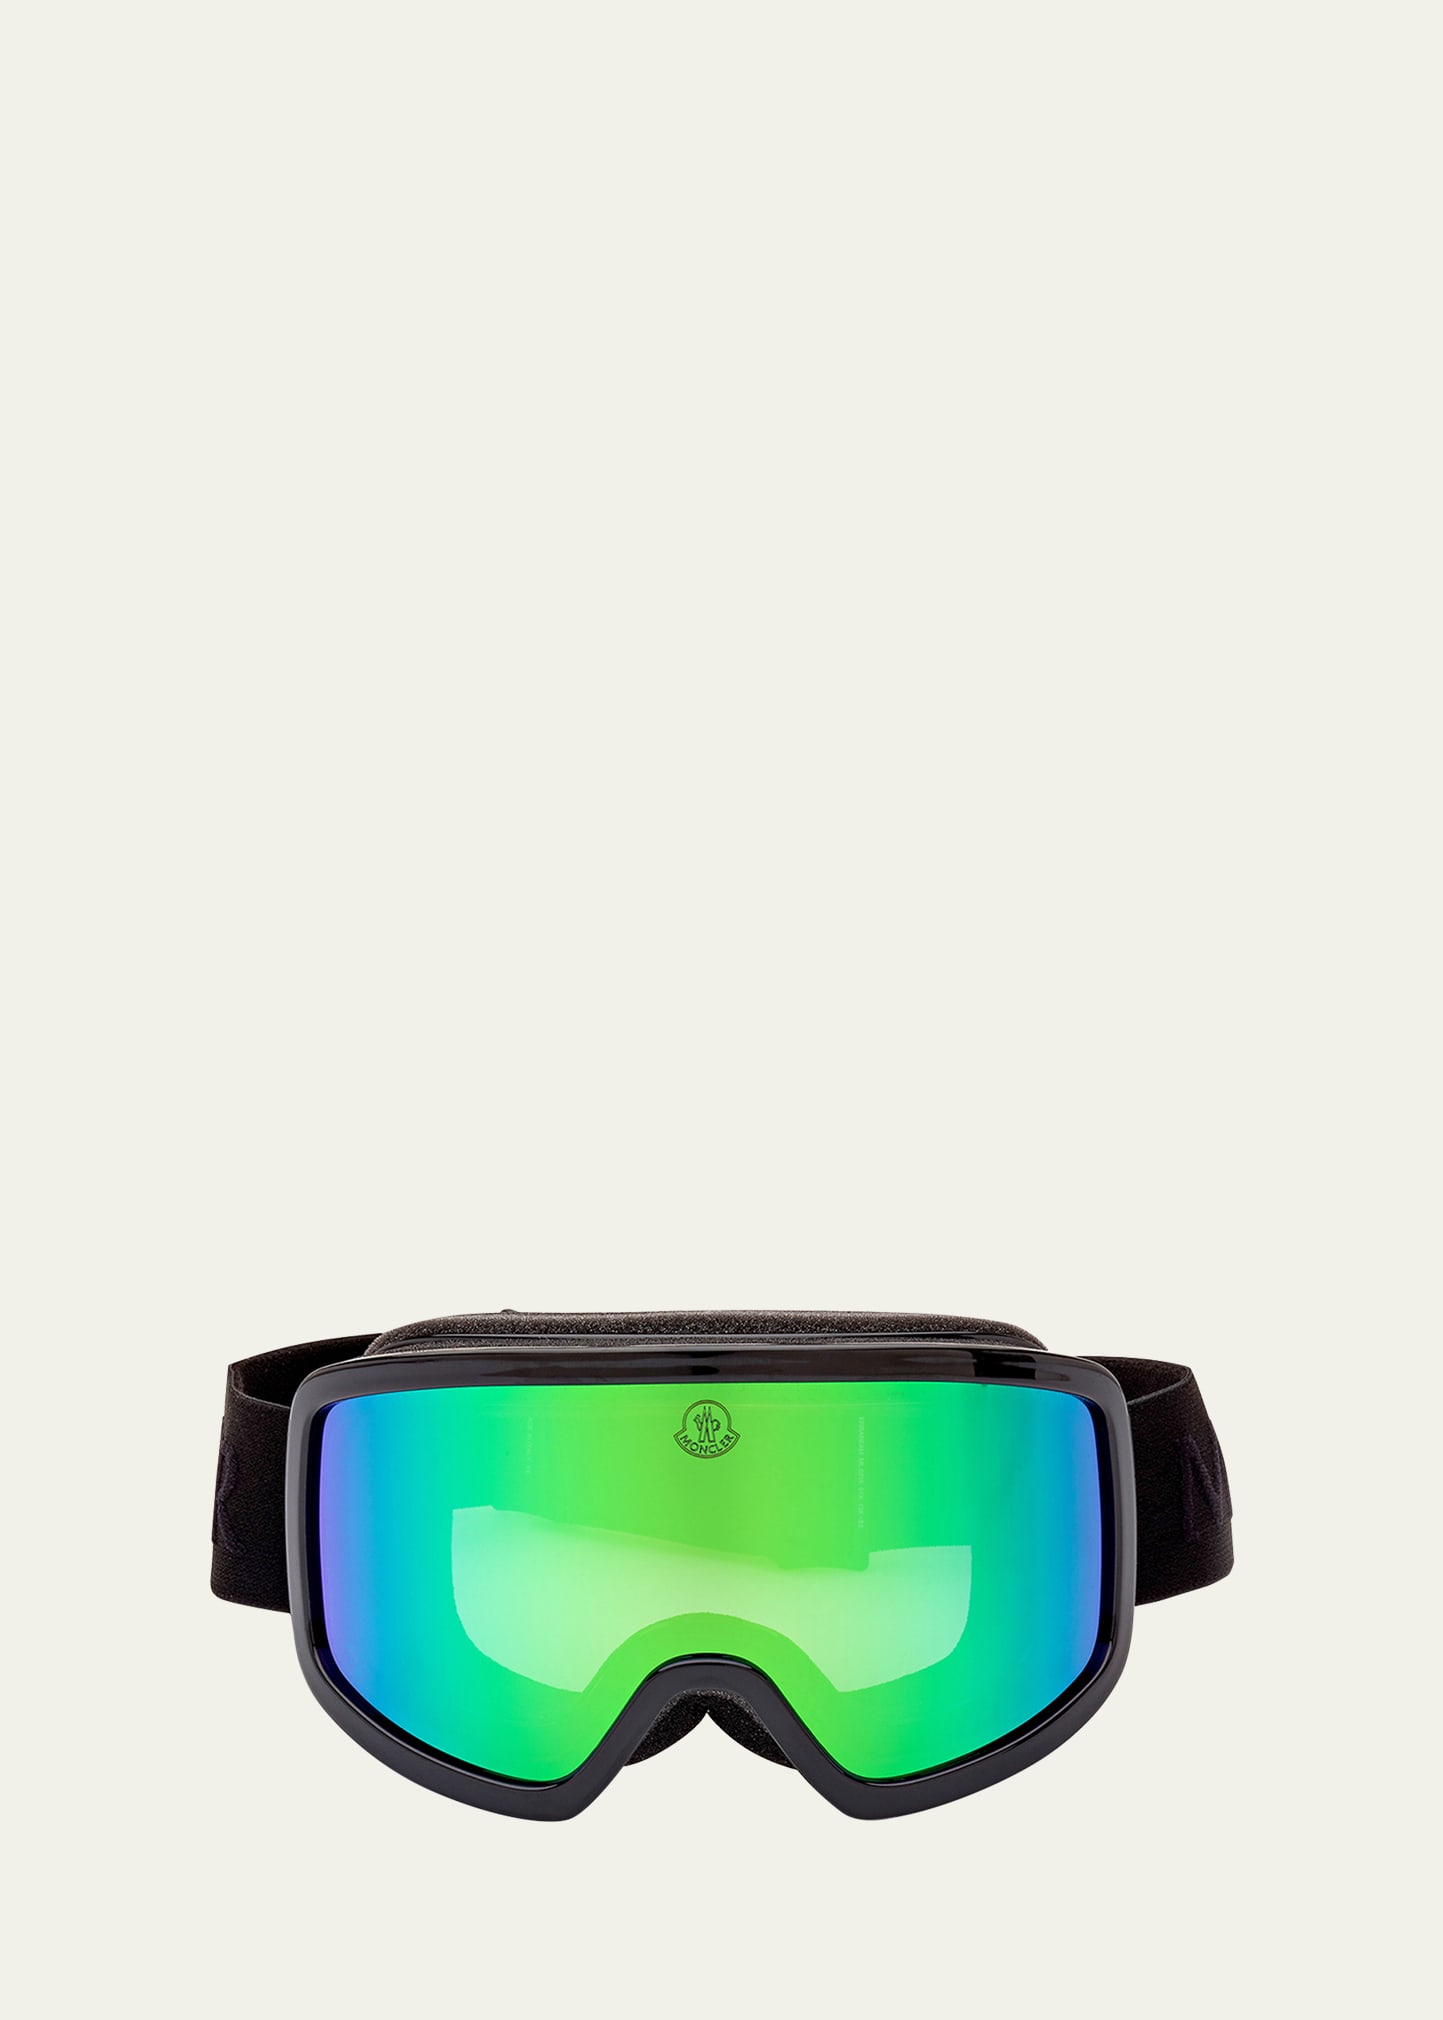 Terrabeam Snow Goggles